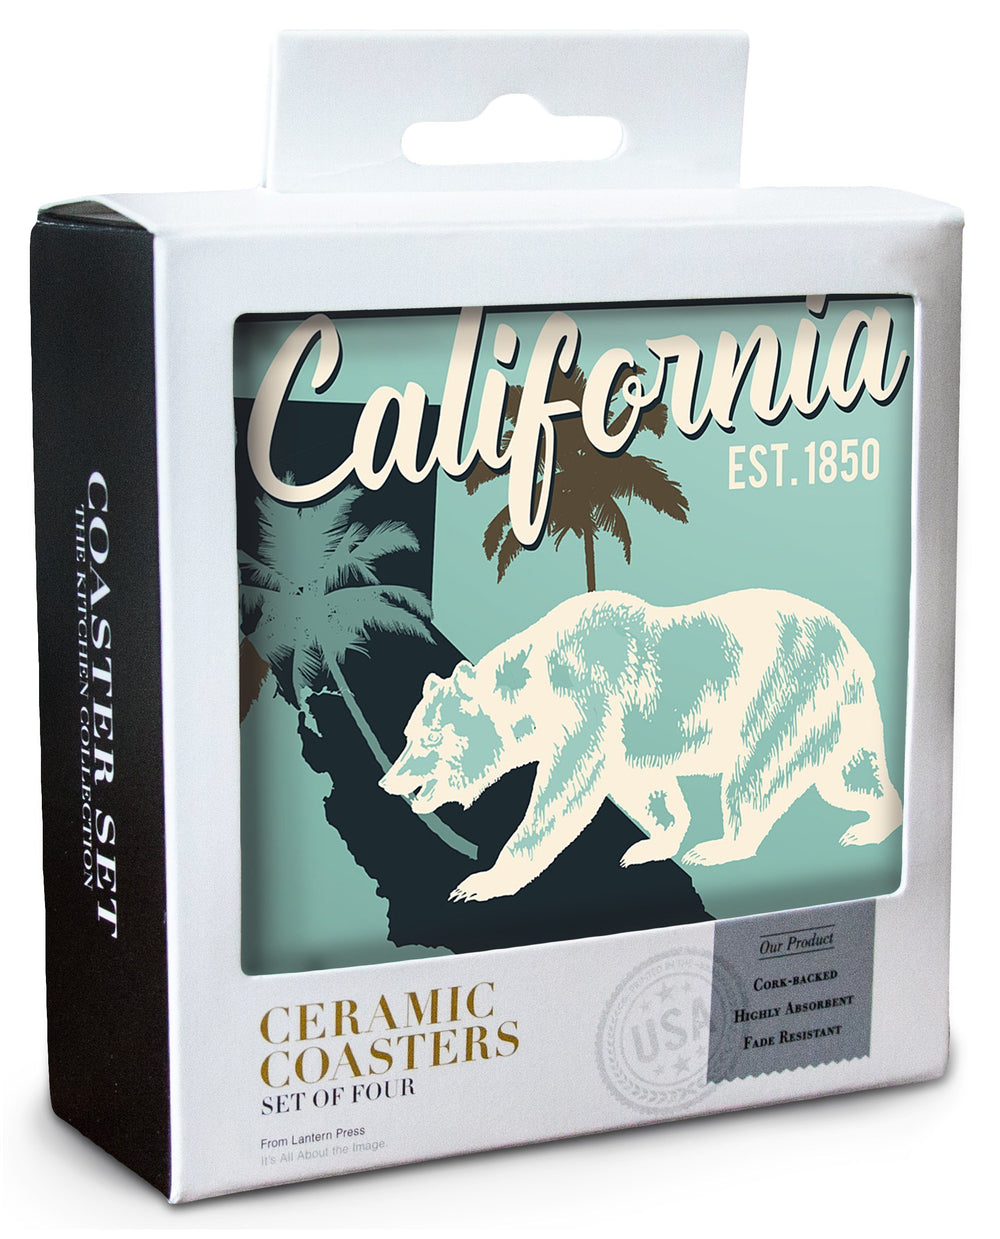 California, State Outline & Bear, Sunshine on Mind, Urban Traveler, Blue, Lantern Press Artwork, Coaster Set Coasters Lantern Press 